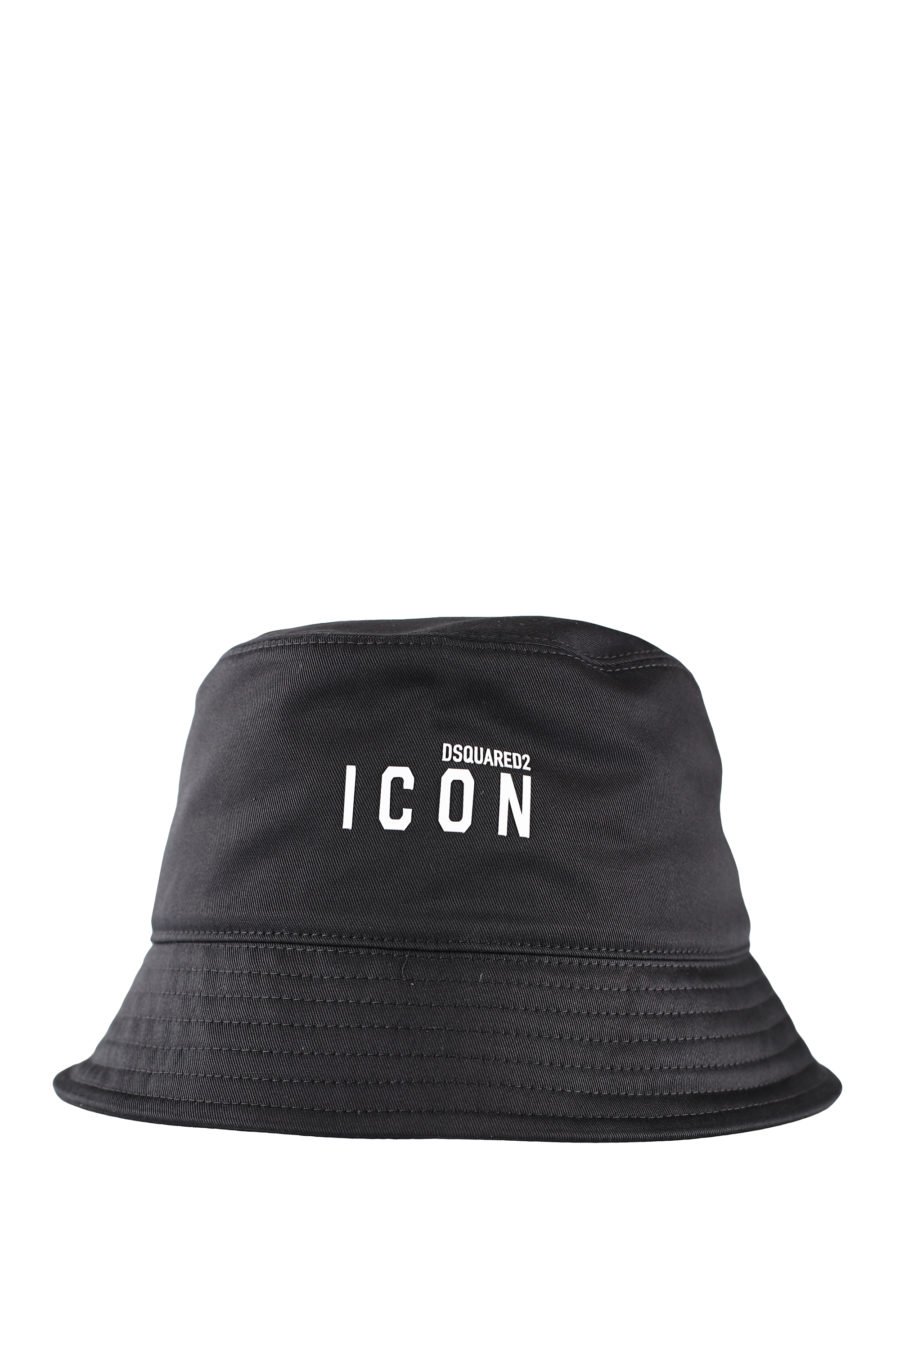 Black fisherman's hat with "icon" logo - IMG 0067